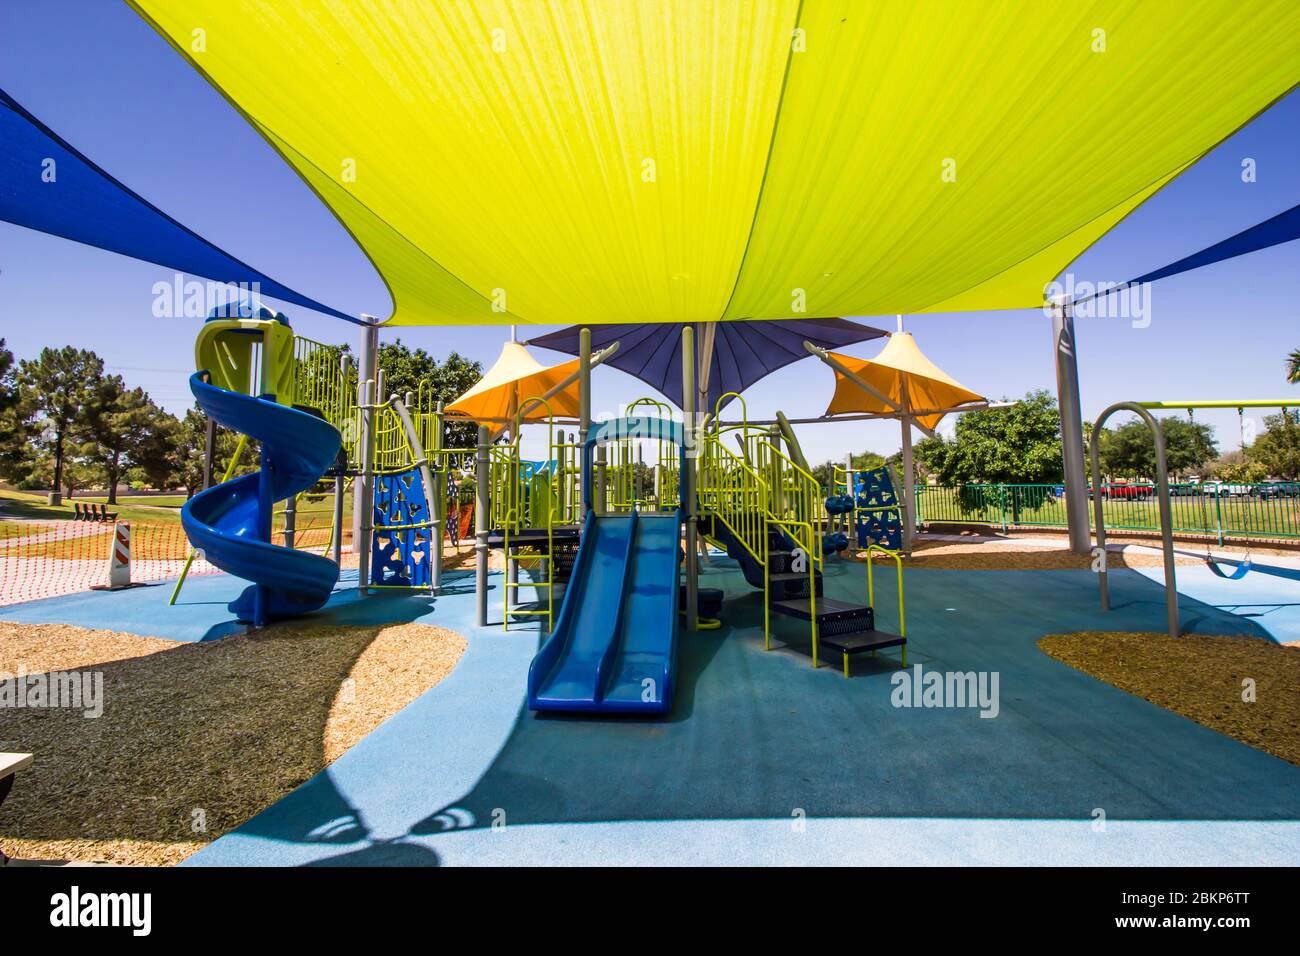 Children's Playground Equipment With Multiple Slides Stock Photo